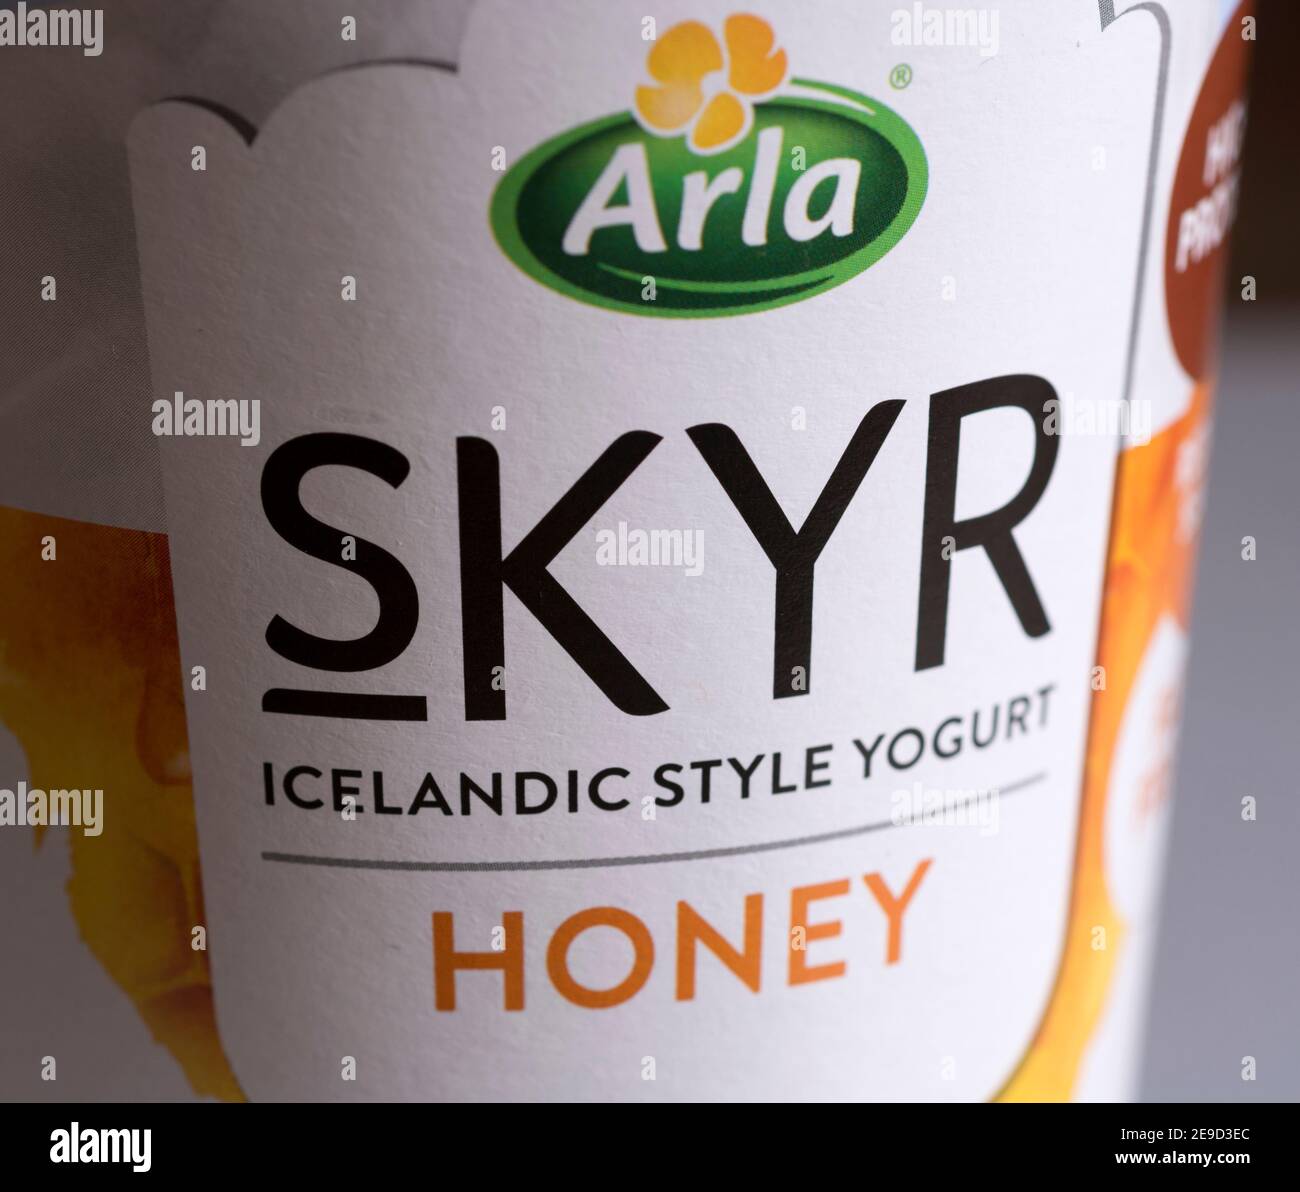 A pot of Arla Alamy - Icelandic Photo yoghurt Stock style Skyr